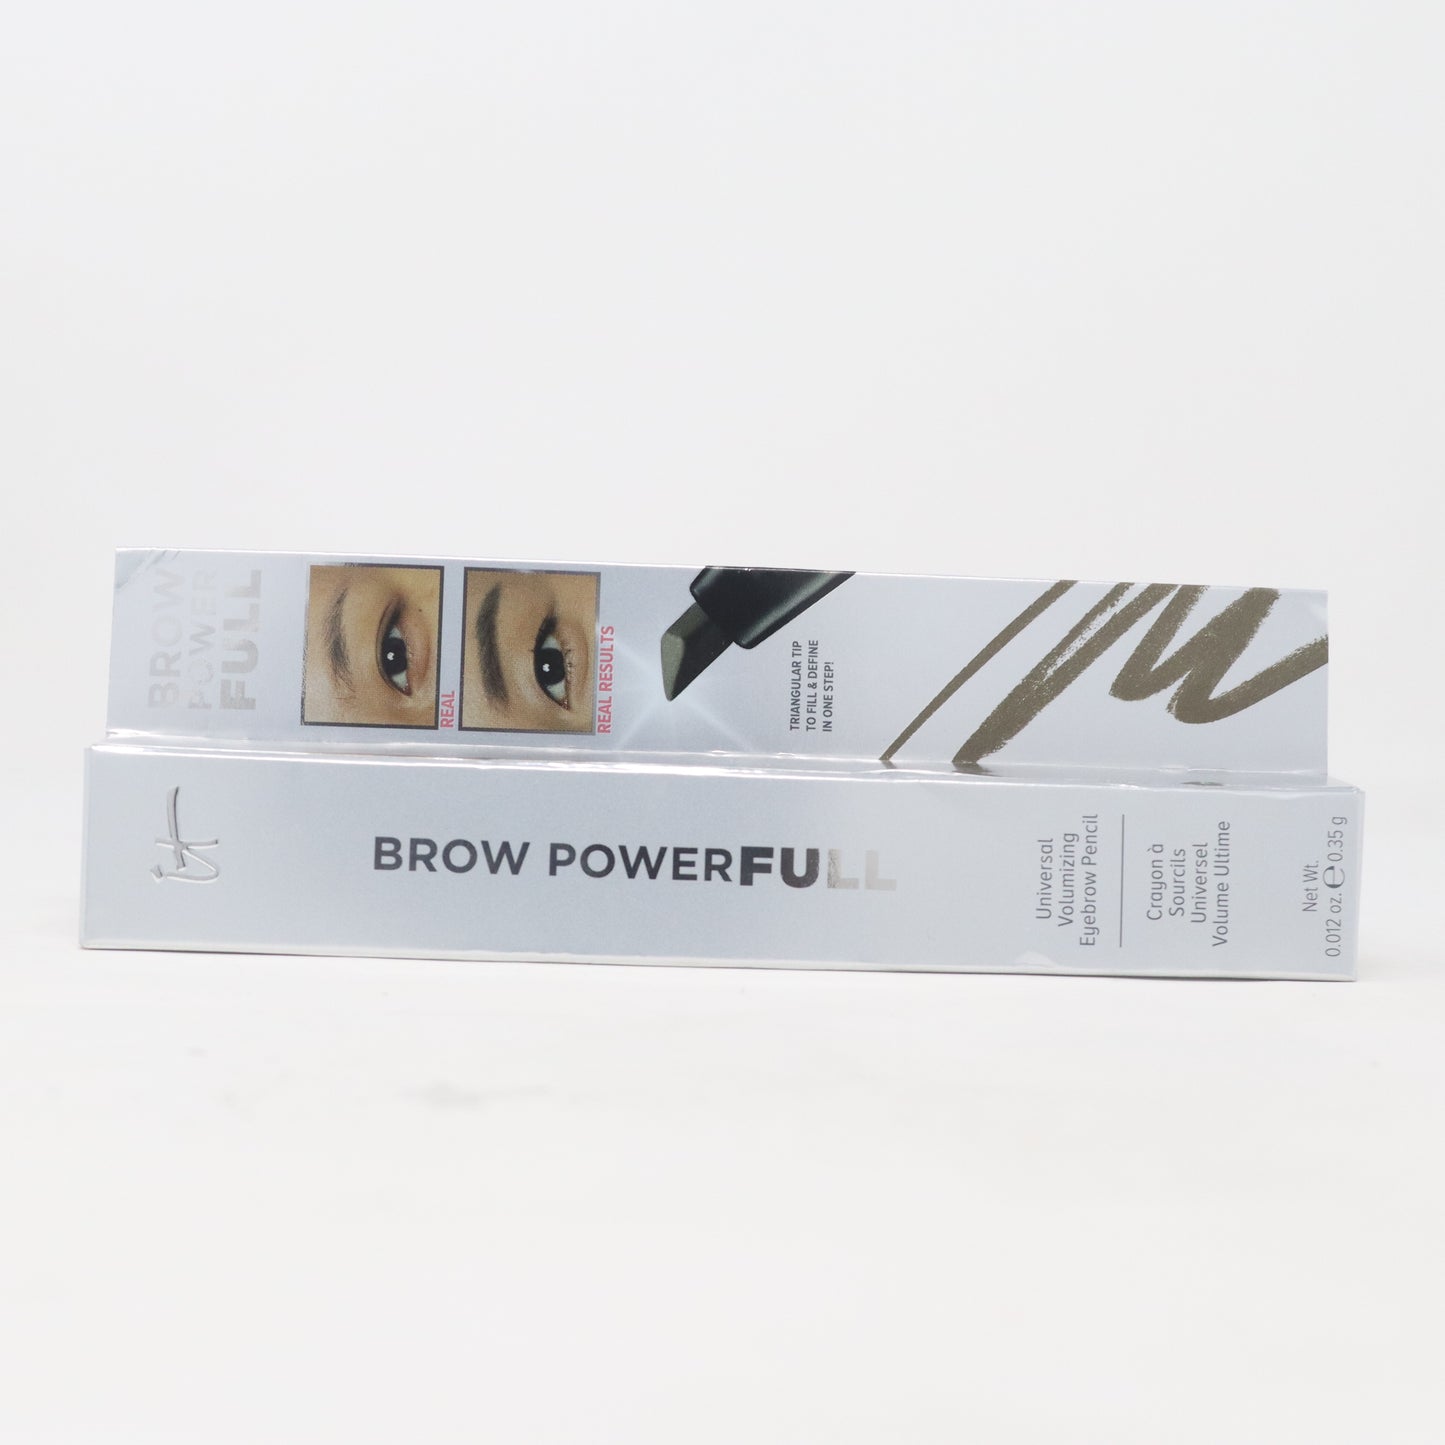 Brow Powerful Eyebrow Pencil 0.35 g